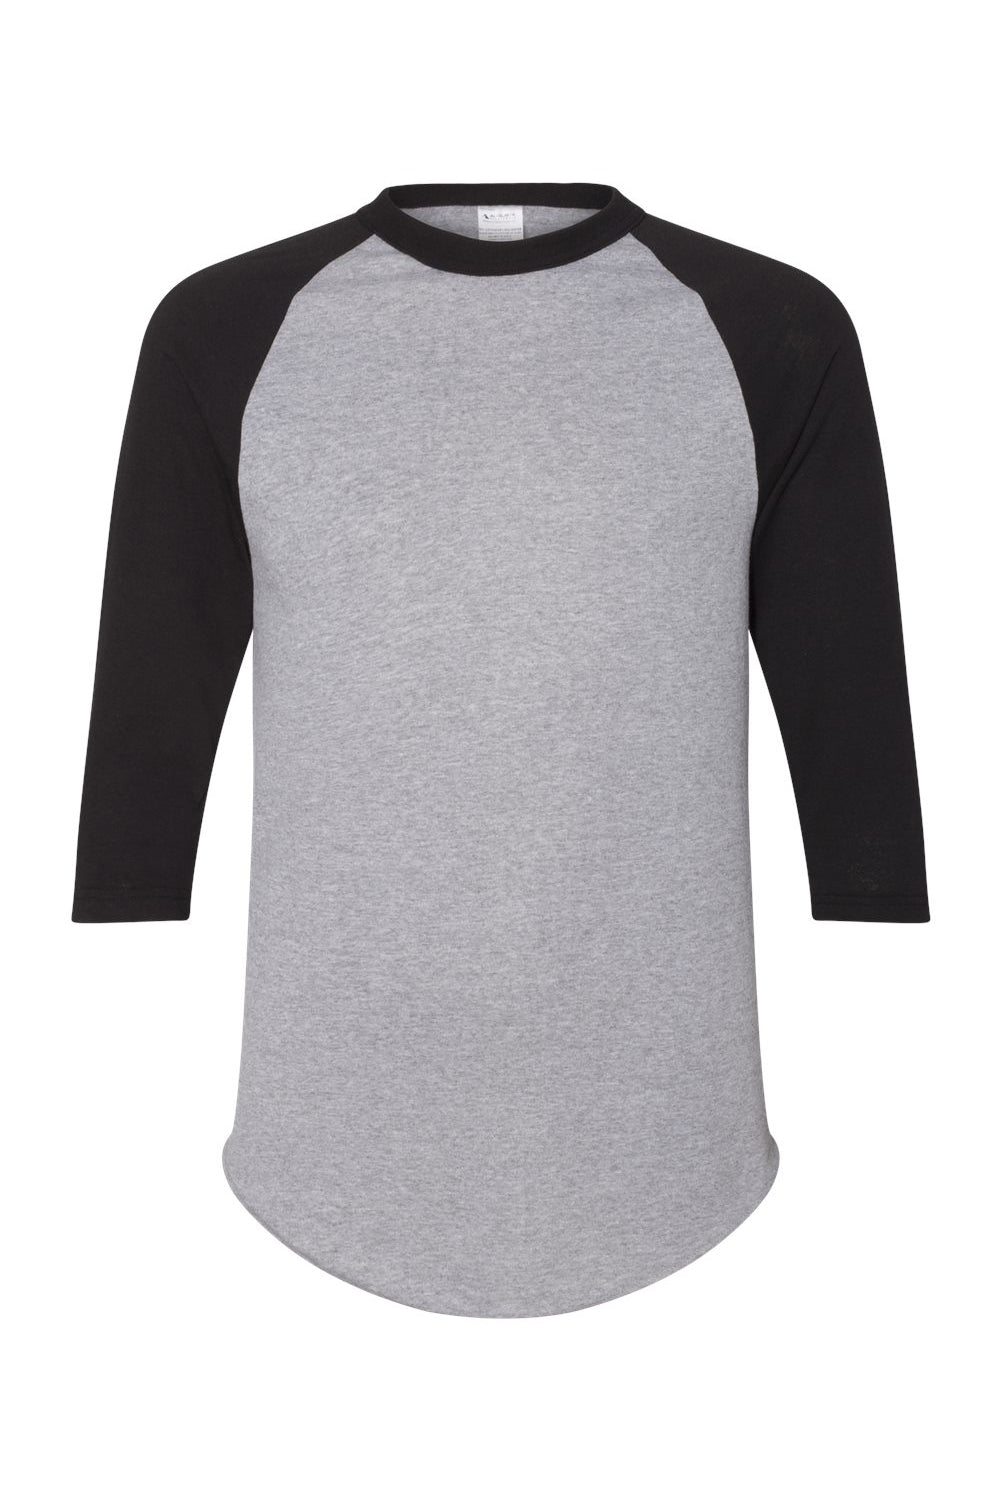 Augusta Sportswear 4420 Mens Raglan 3/4 Sleeve Crewneck T-Shirt Heather Grey/Black Flat Front